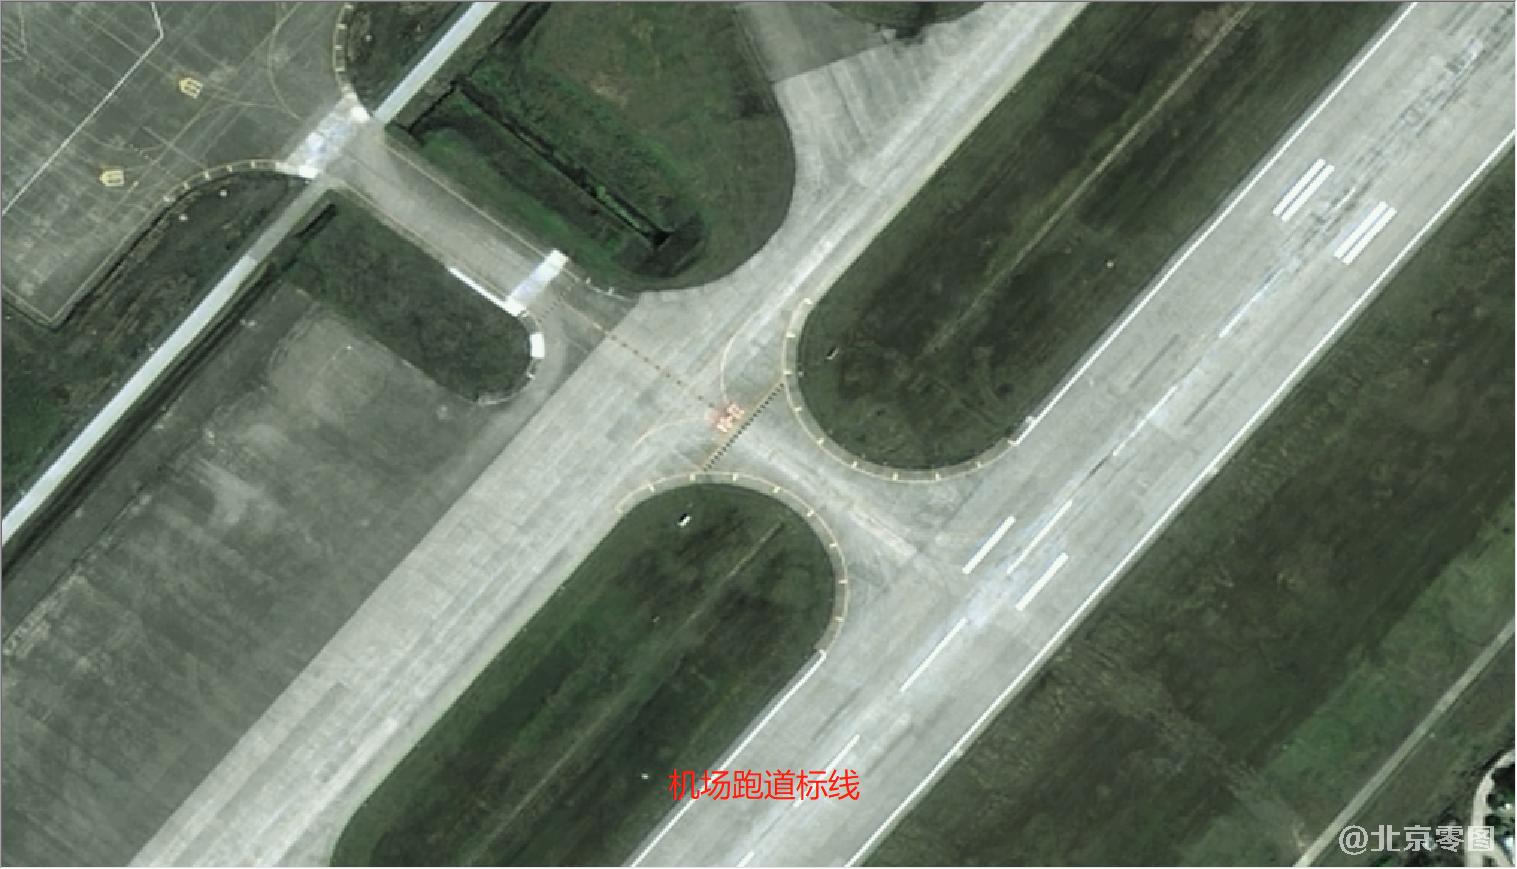 0.5-meter Satellite Image Samples